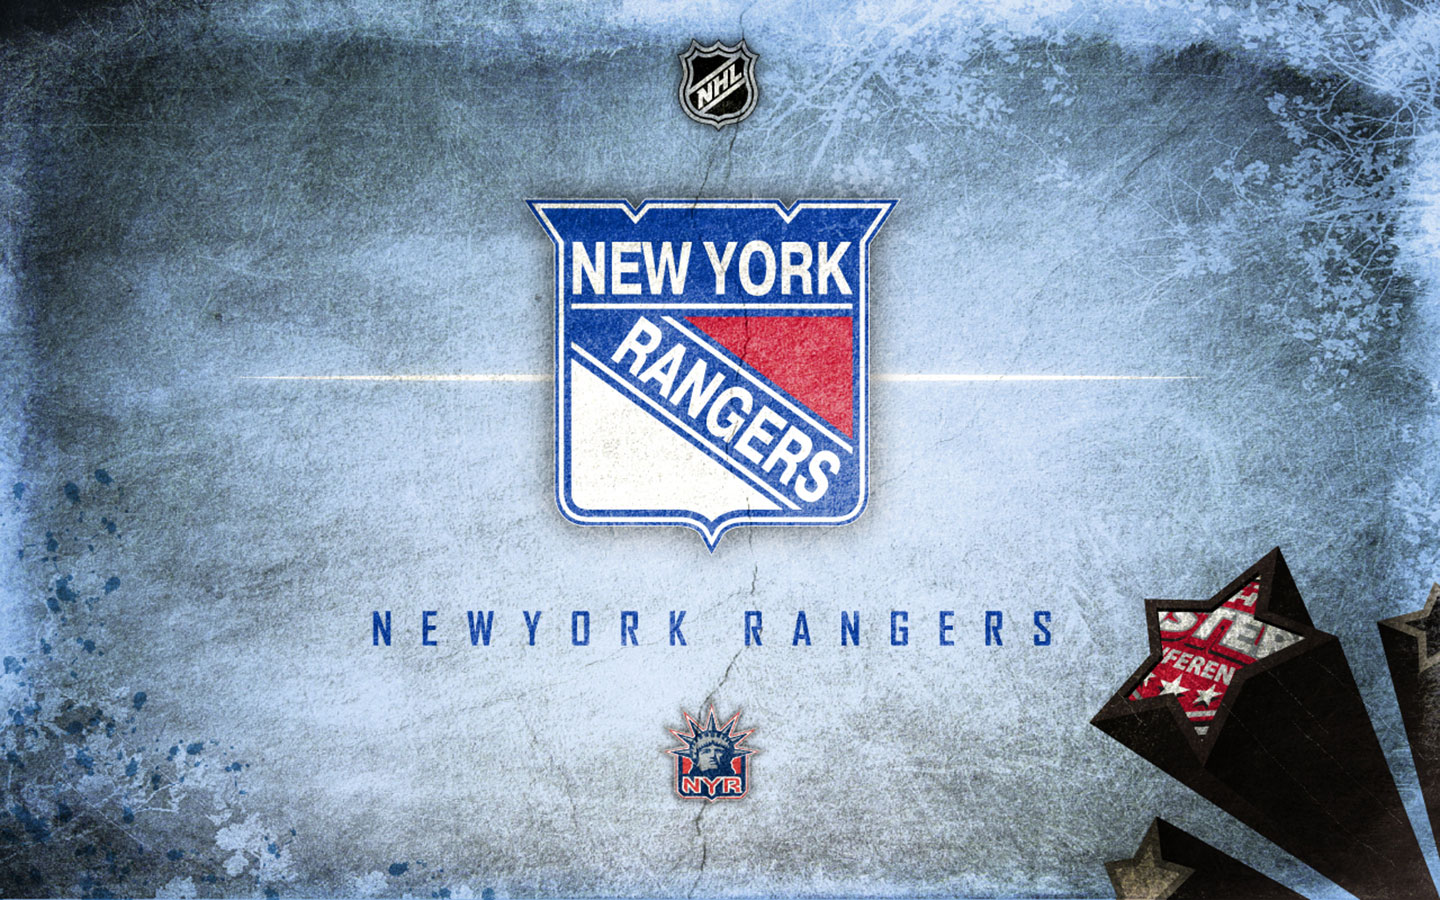 New York Rangers wallpaper 1440x900 54071